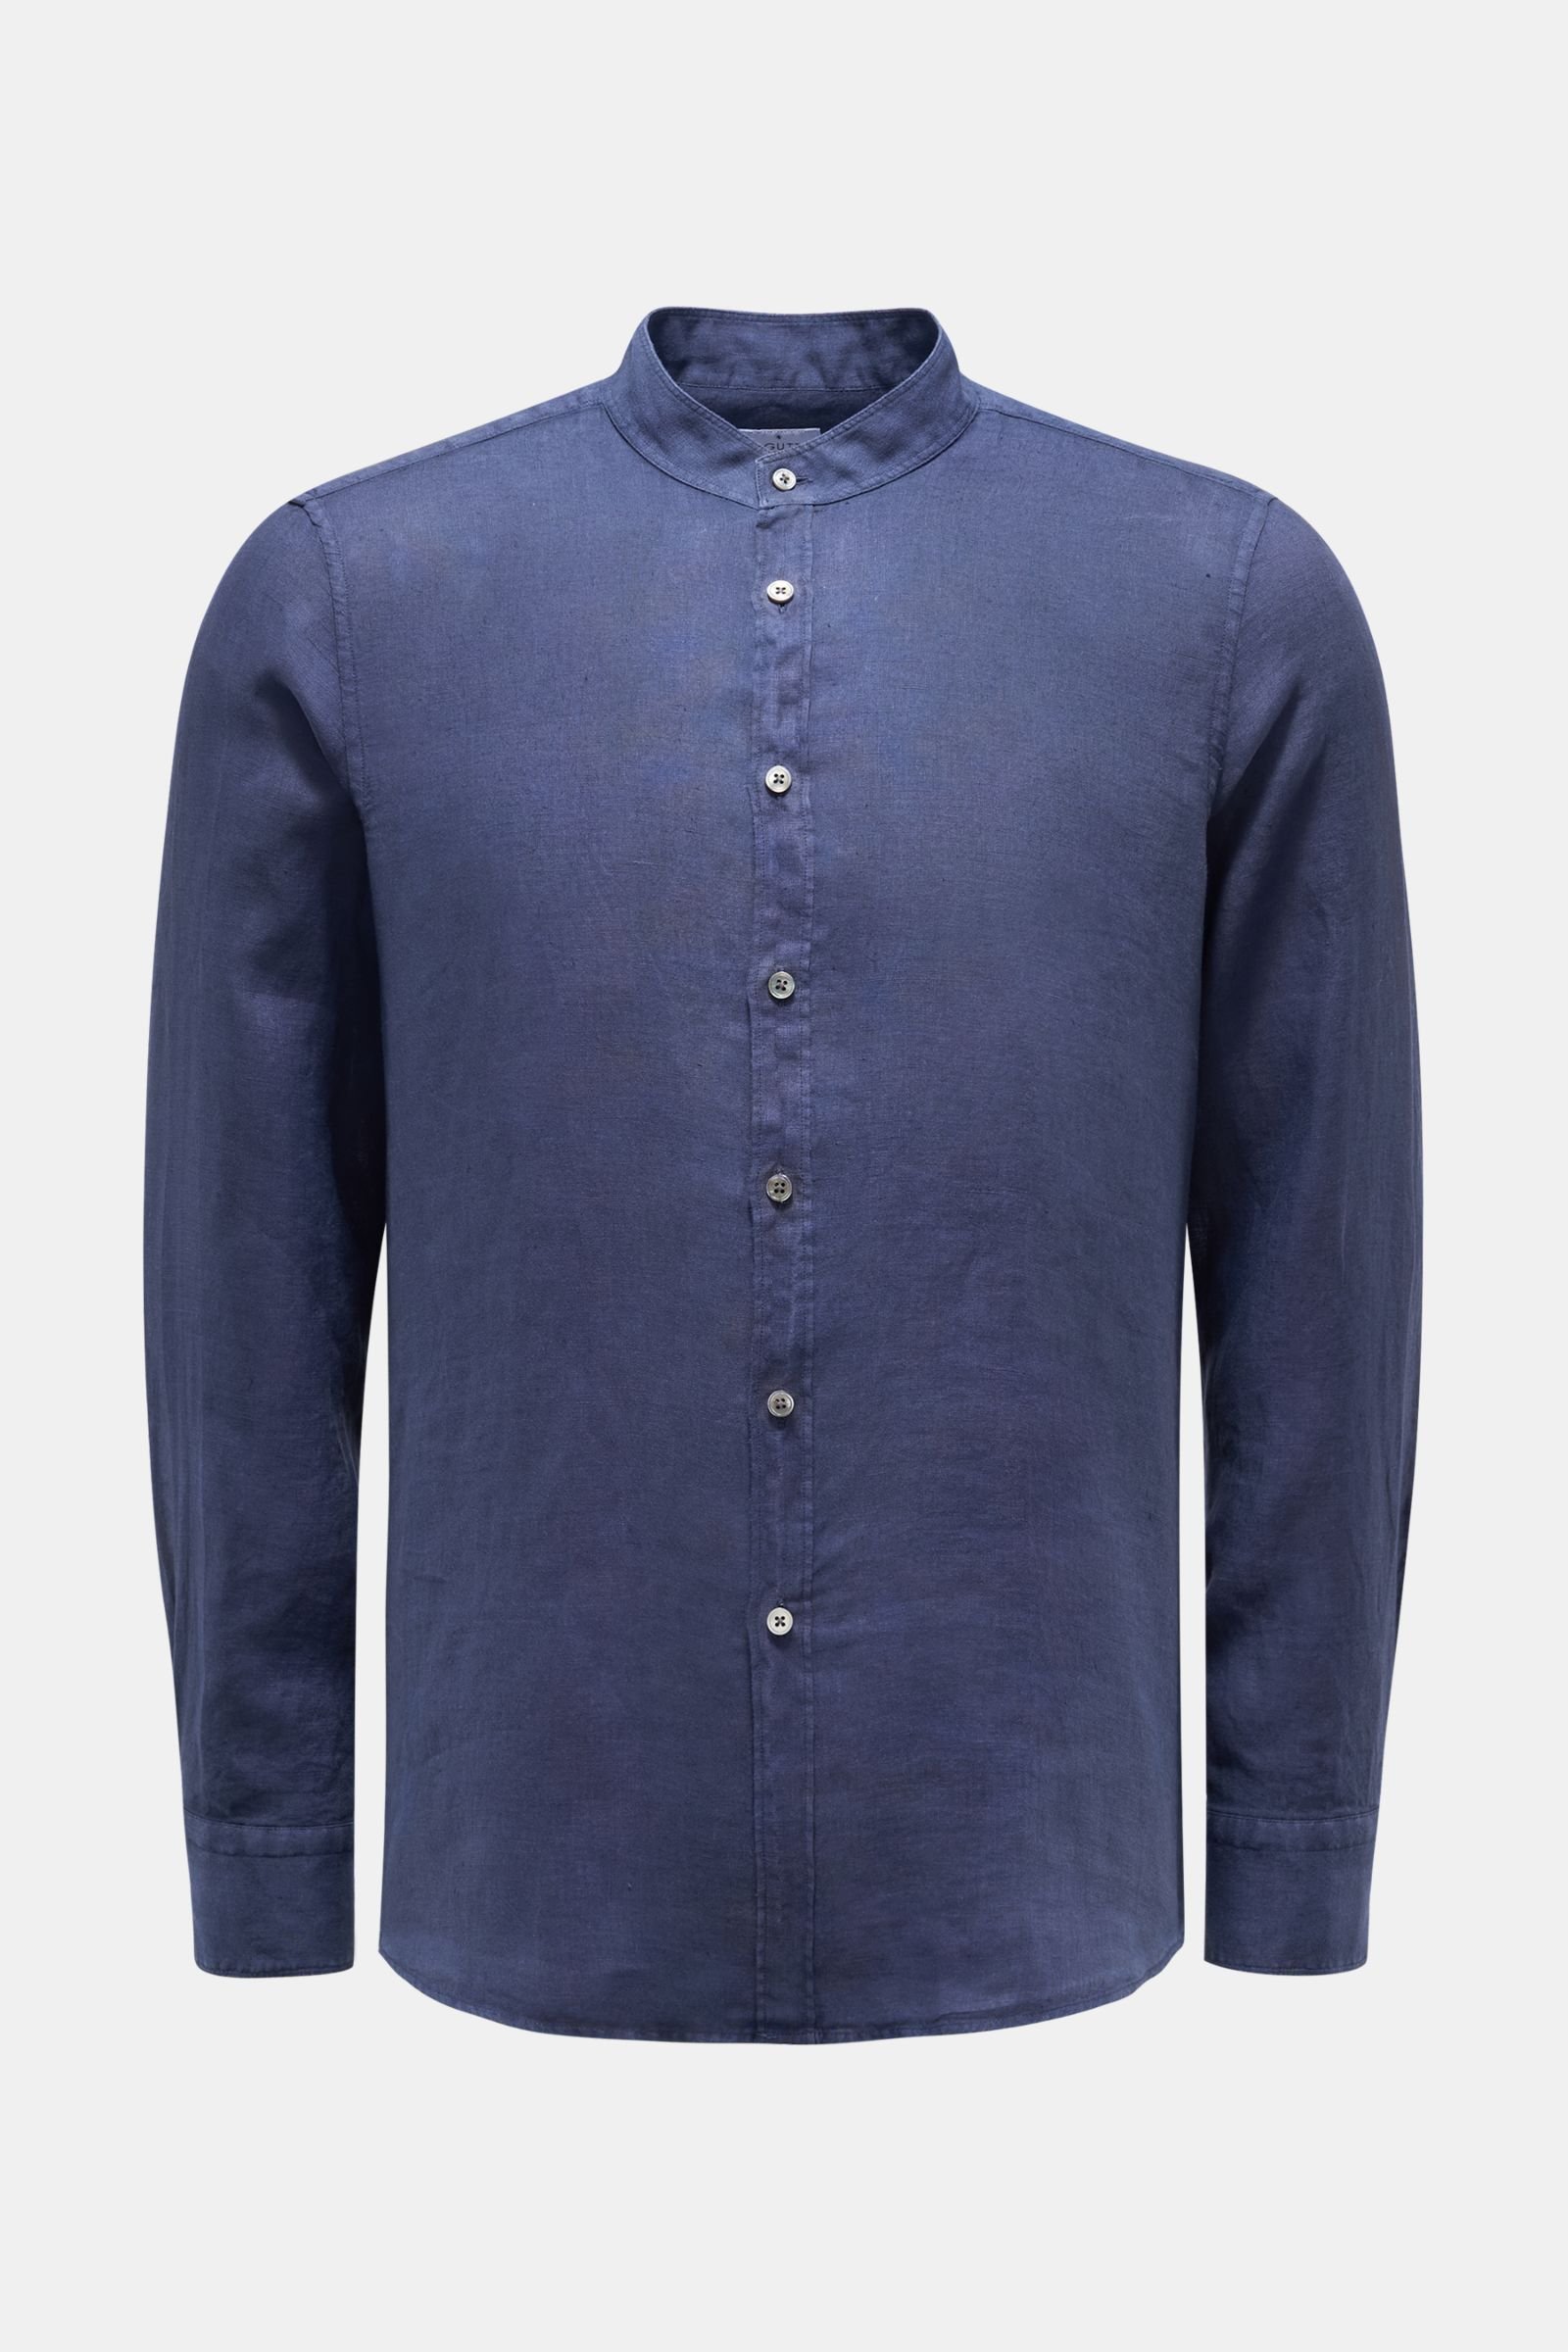 Linen shirt 'Ncannes' grandad collar navy